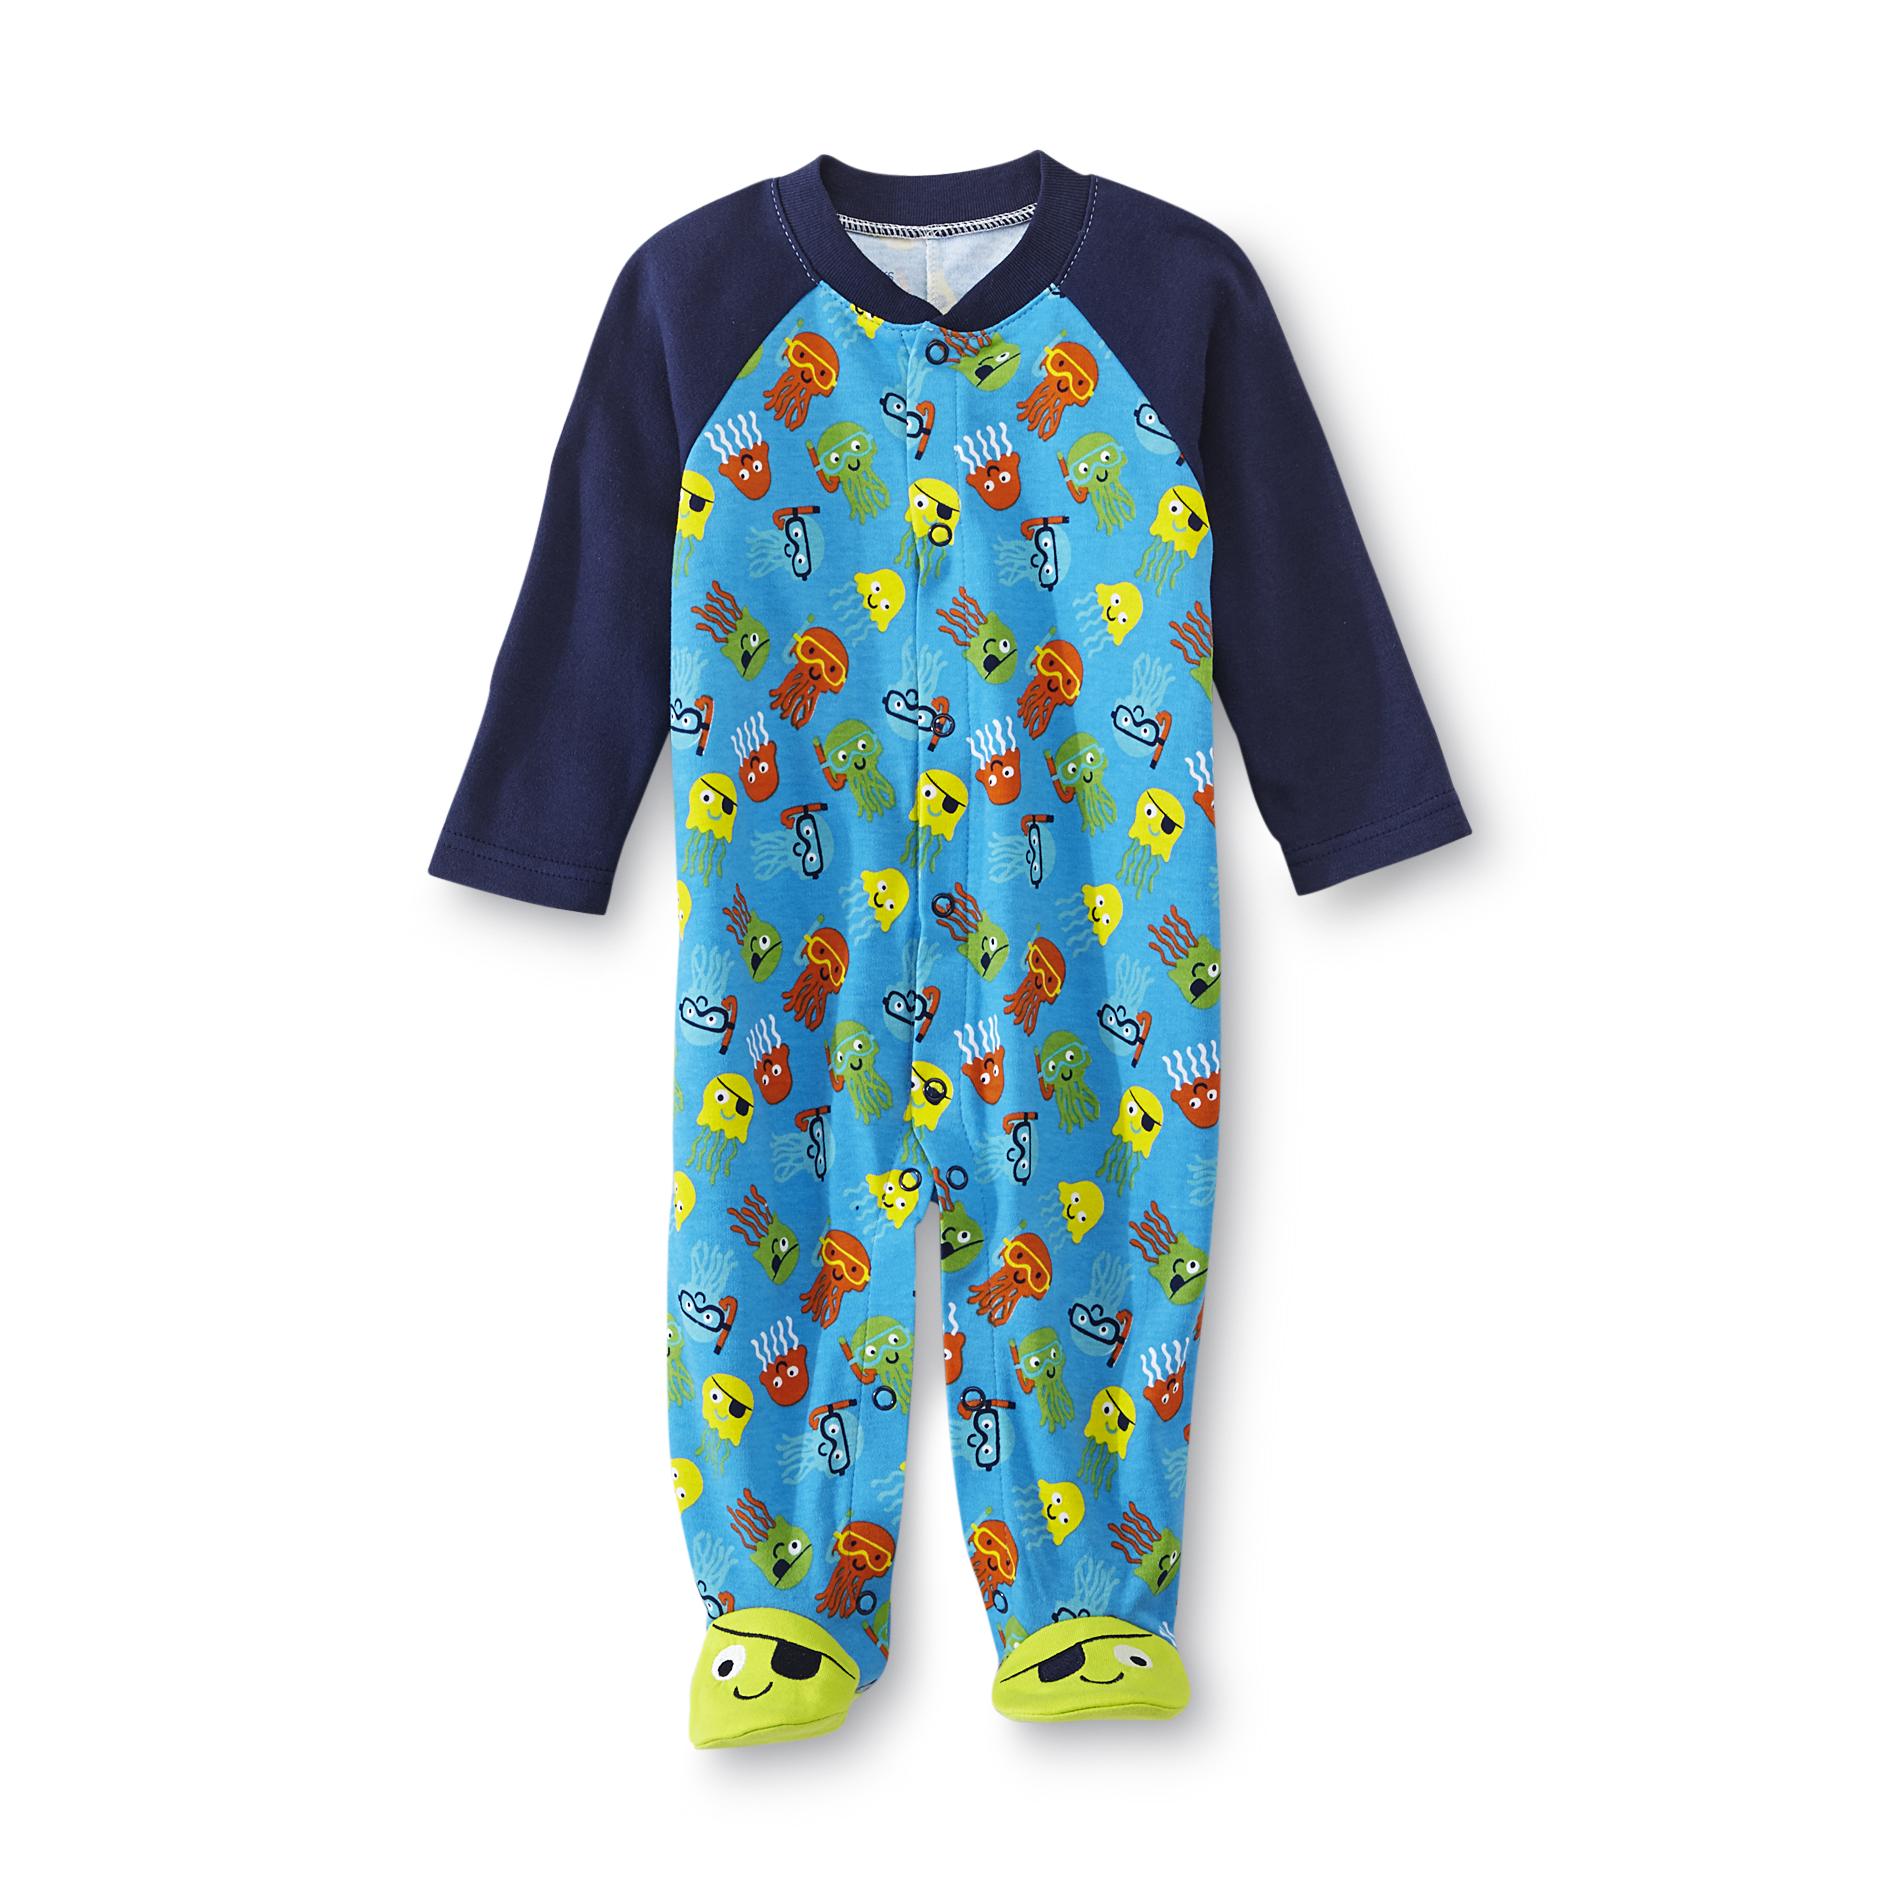 Little Wonders Newborn Boy's Footed Sleeper Pajamas - Pirate Jellyfish